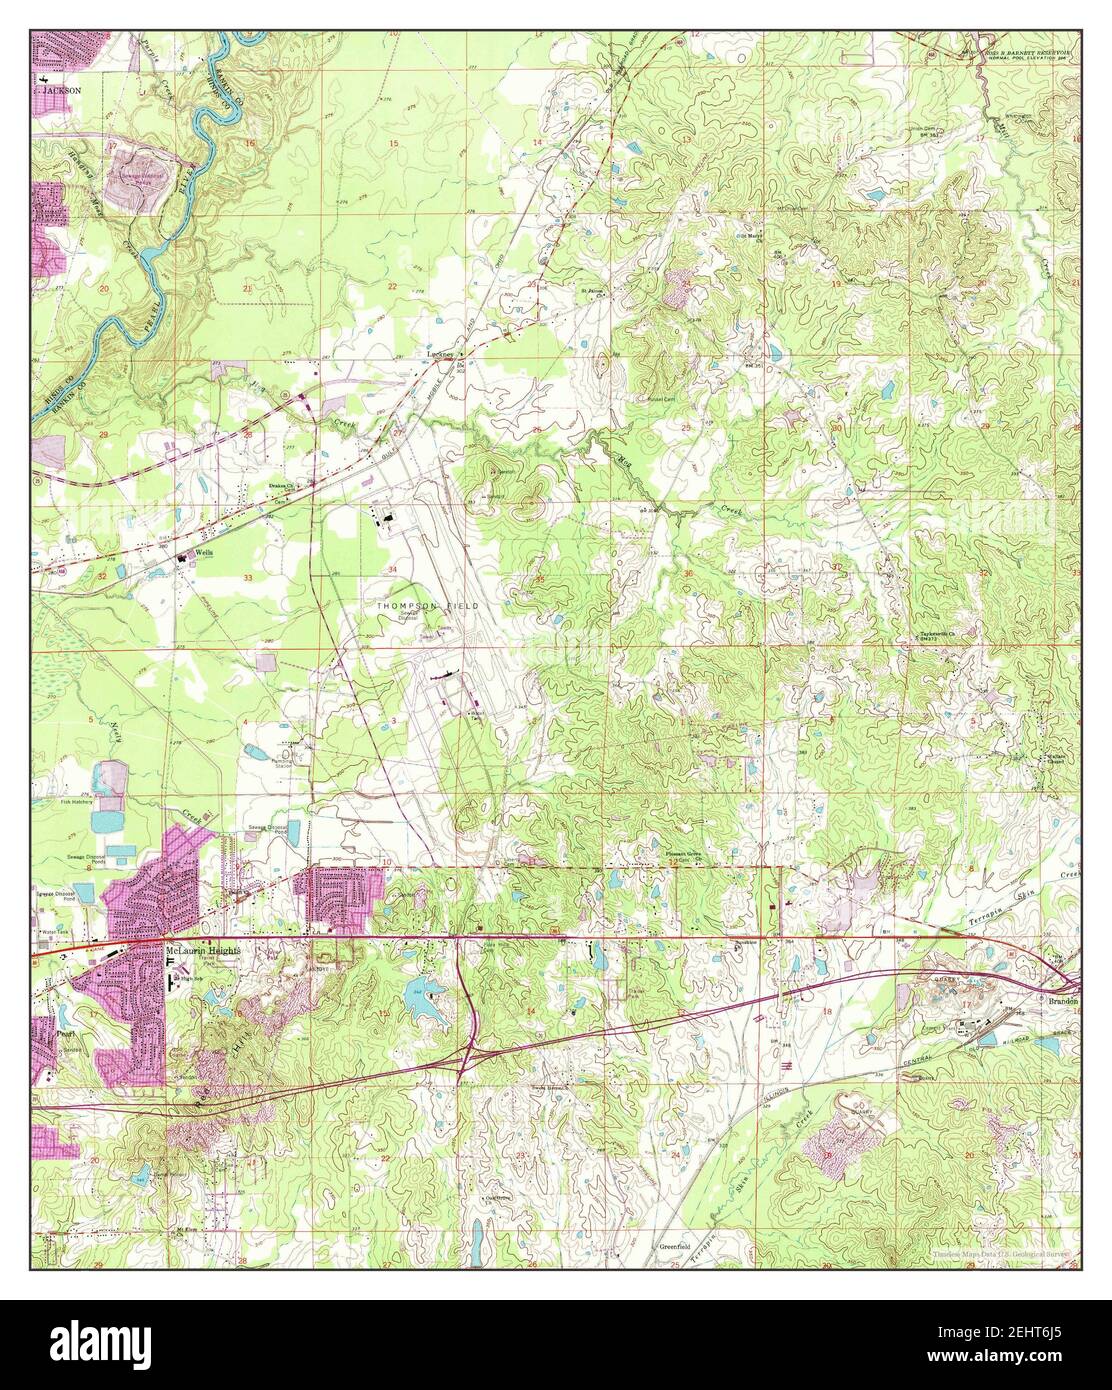 Jackson SE, Mississippi, map 1963, 1:24000, United States of America by Timeless Maps, data U.S. Geological Survey Stock Photo